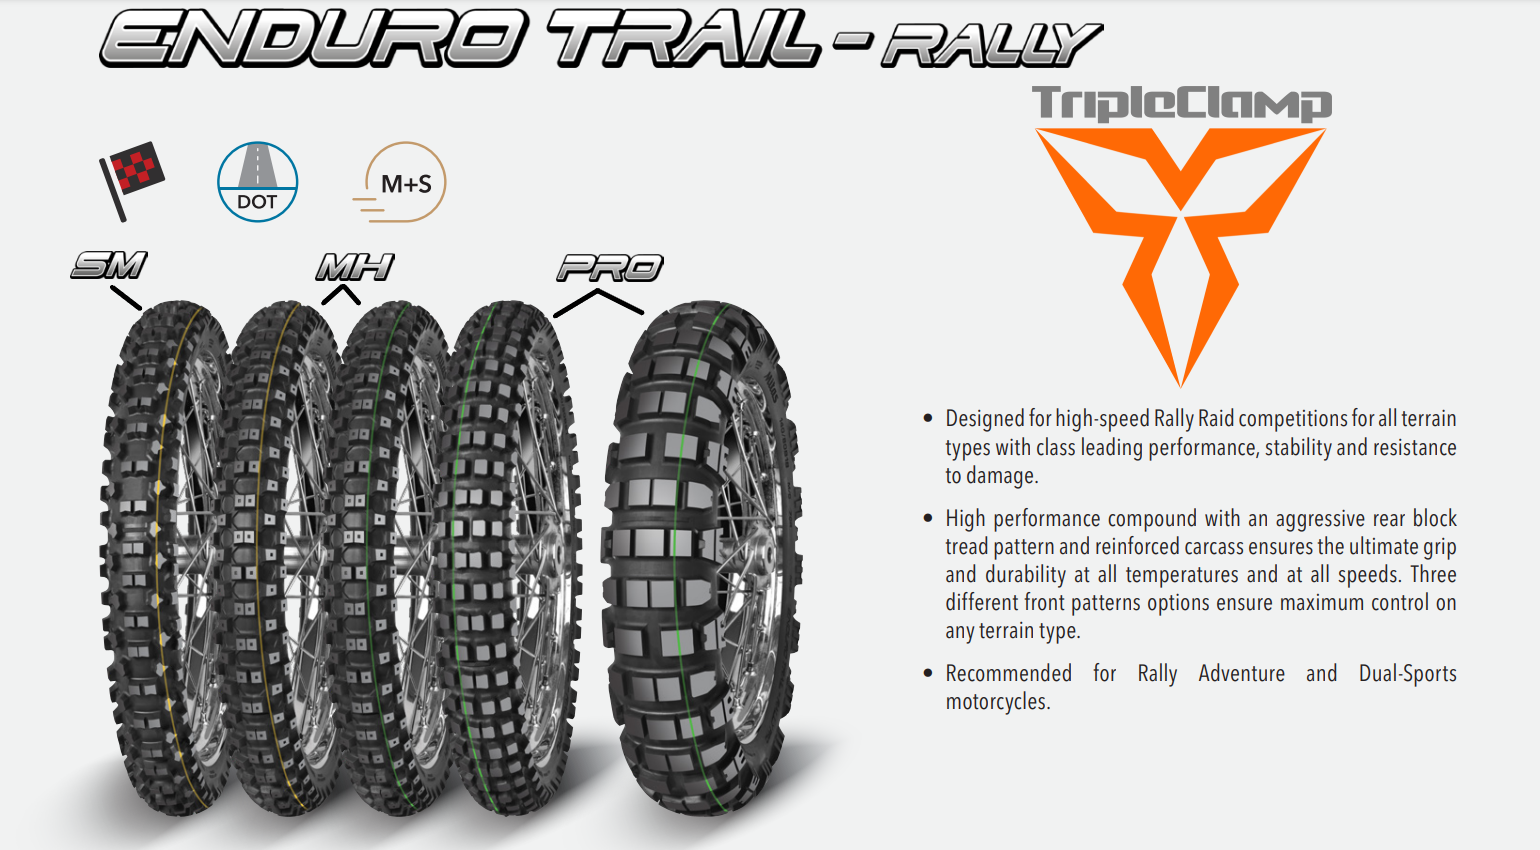 Mitas - Enduro Trail Rally MH Tire